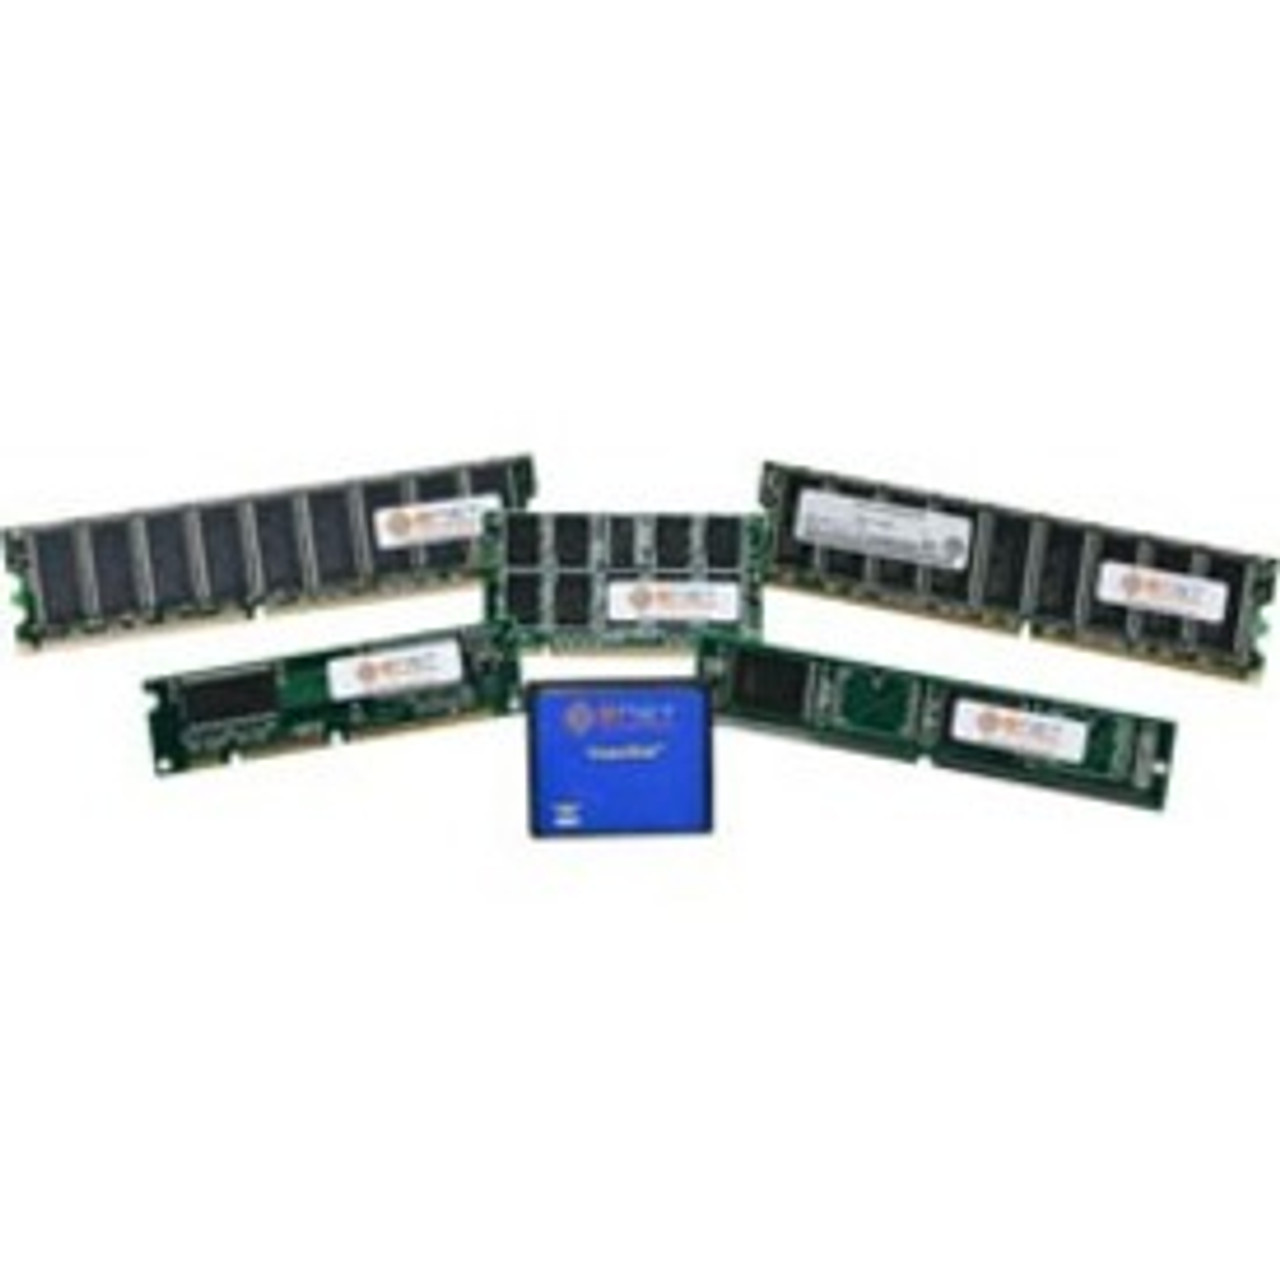 ENET 256 MB CompactFlash - 7201-FLD256-ENC